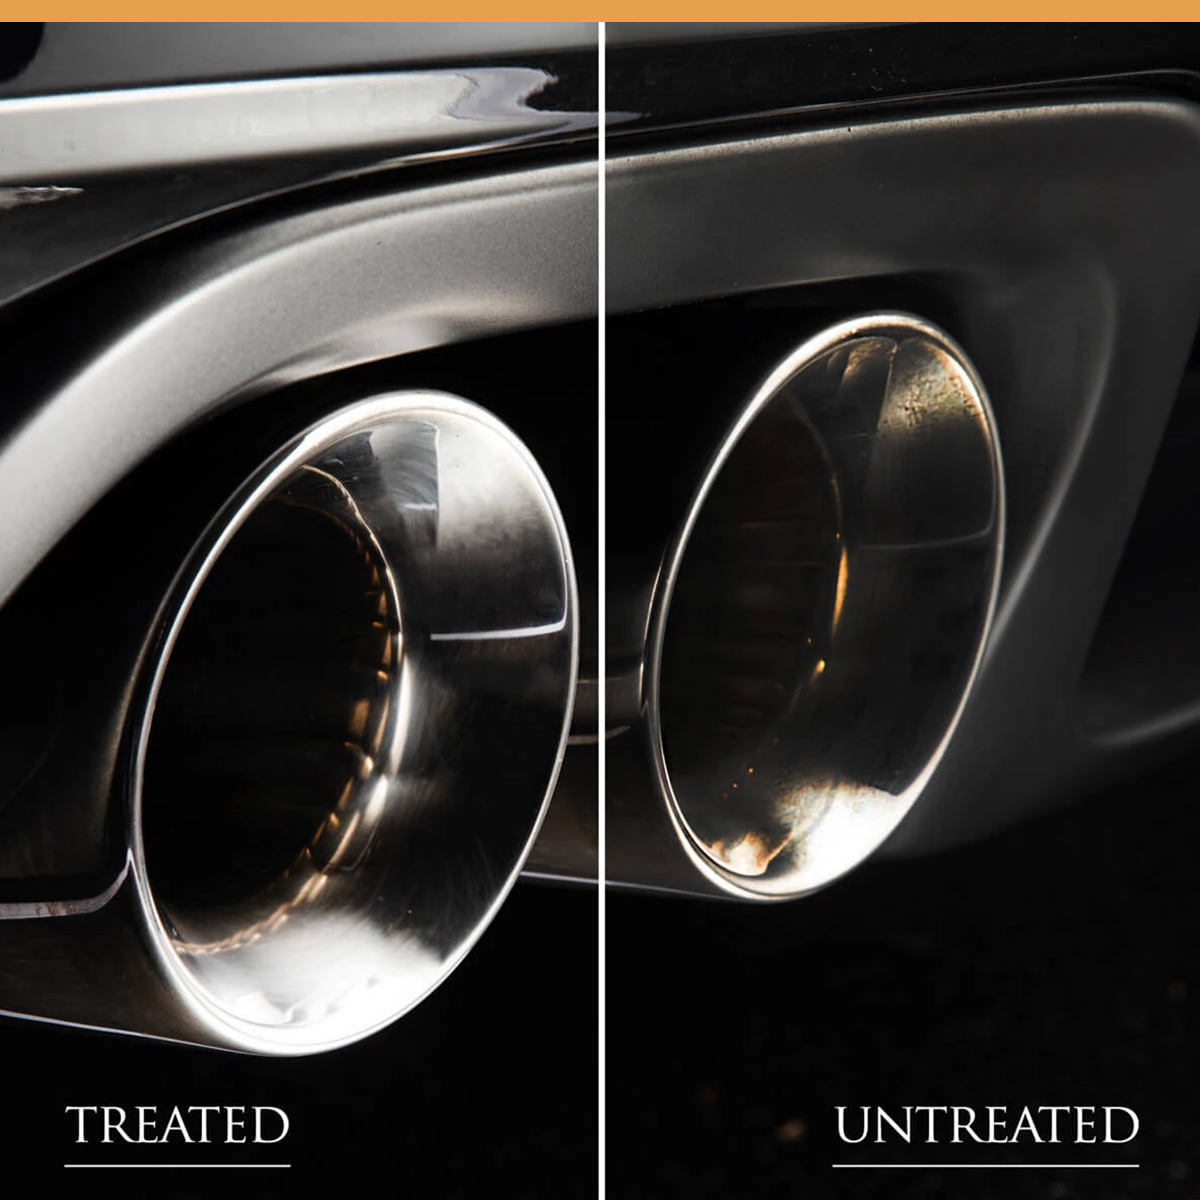 Comparison image of treated vs untreated chrome metal car trim.